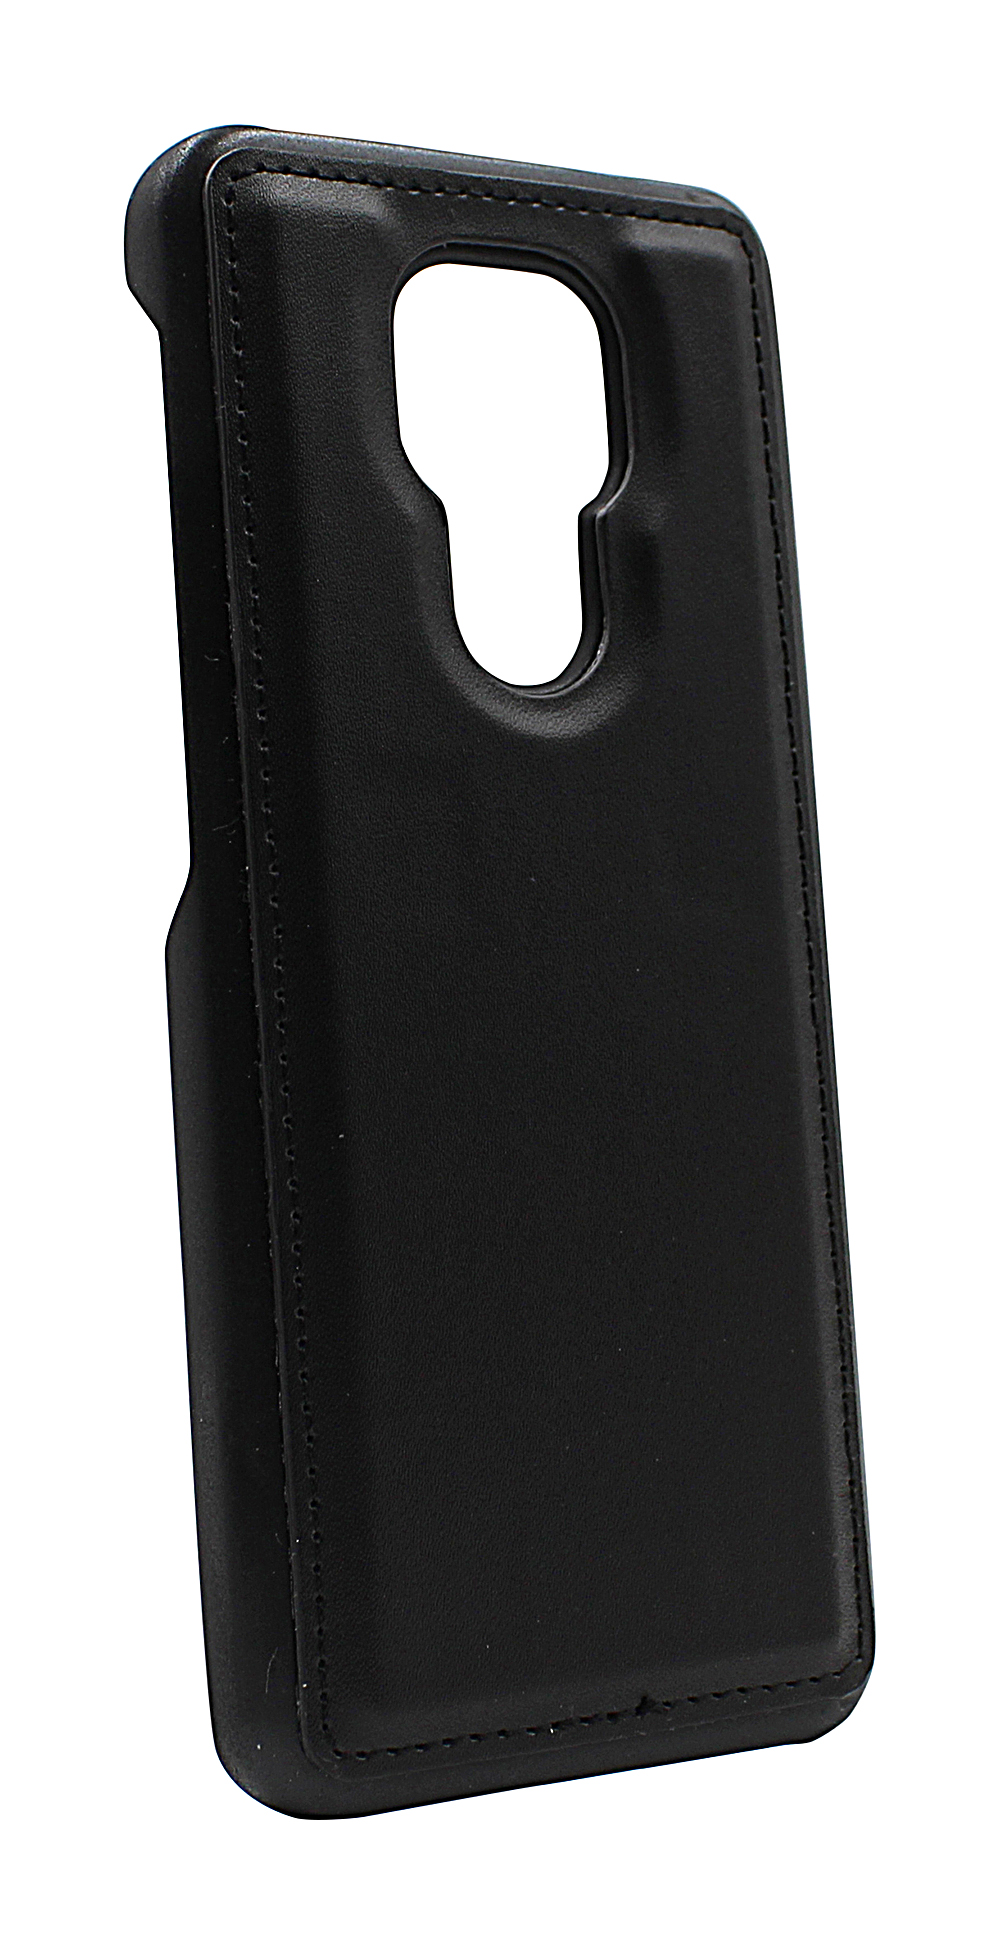 CoverInSkimblocker XL Magnet Fodral Motorola Moto E7 Plus (XT2081-2)